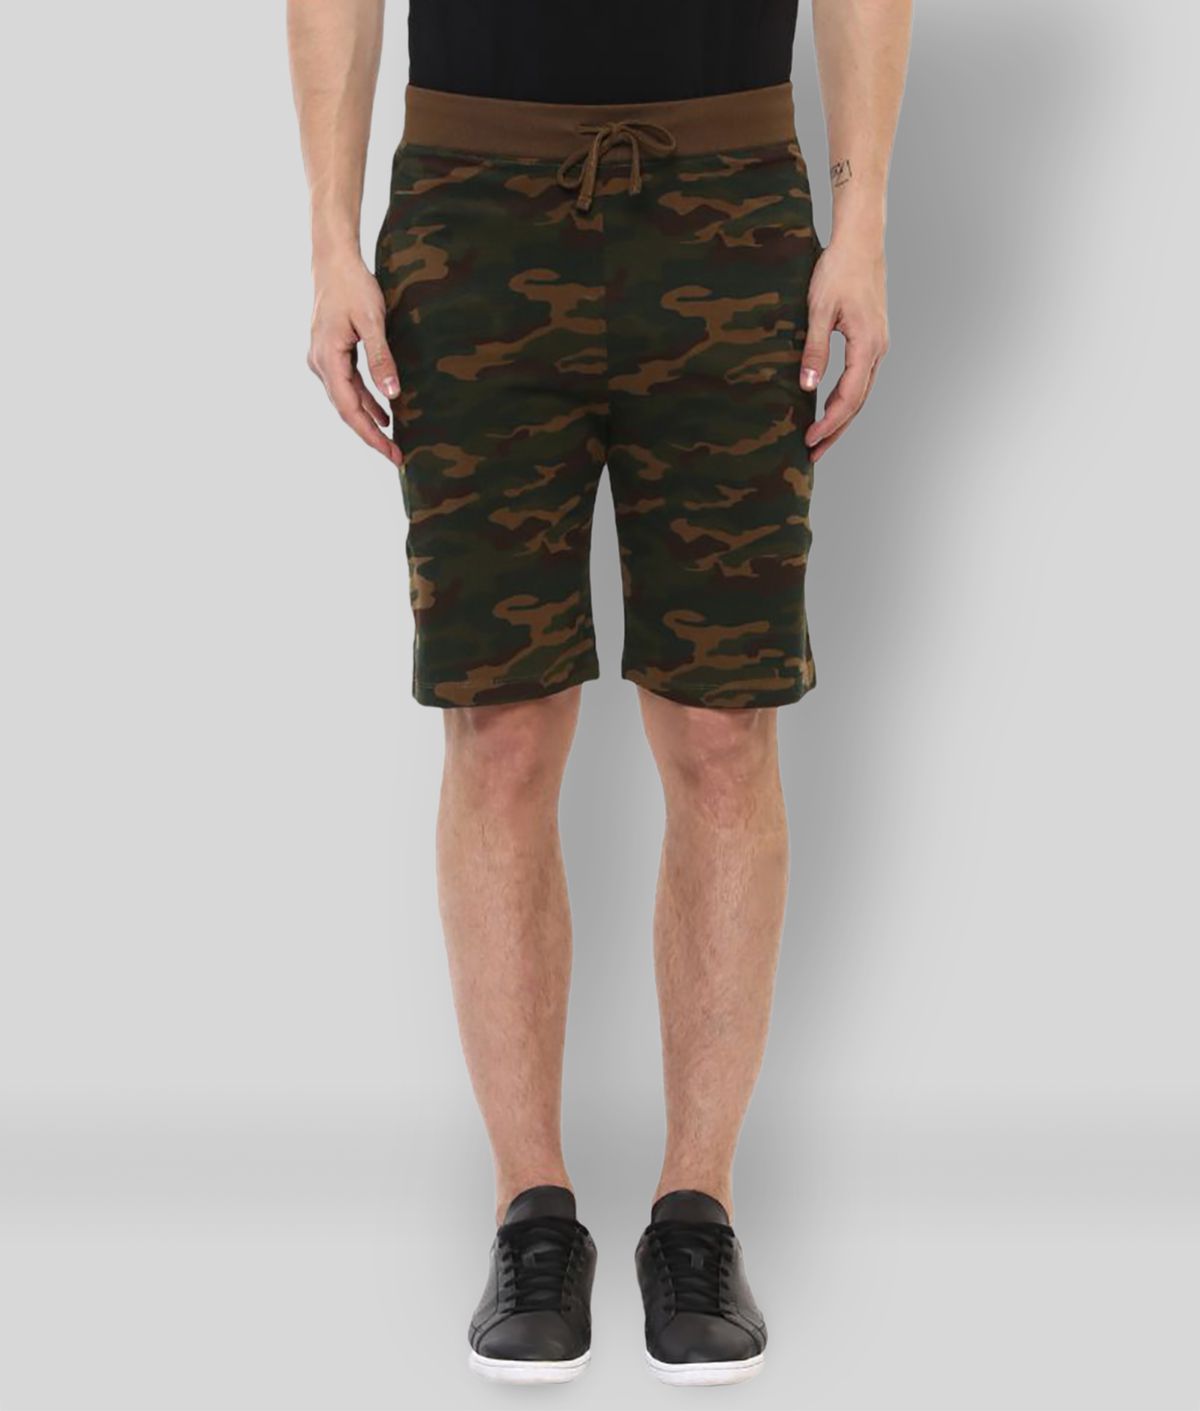 Urbano Fashion - Green Cotton Men's Shorts ( Pack of 1 )